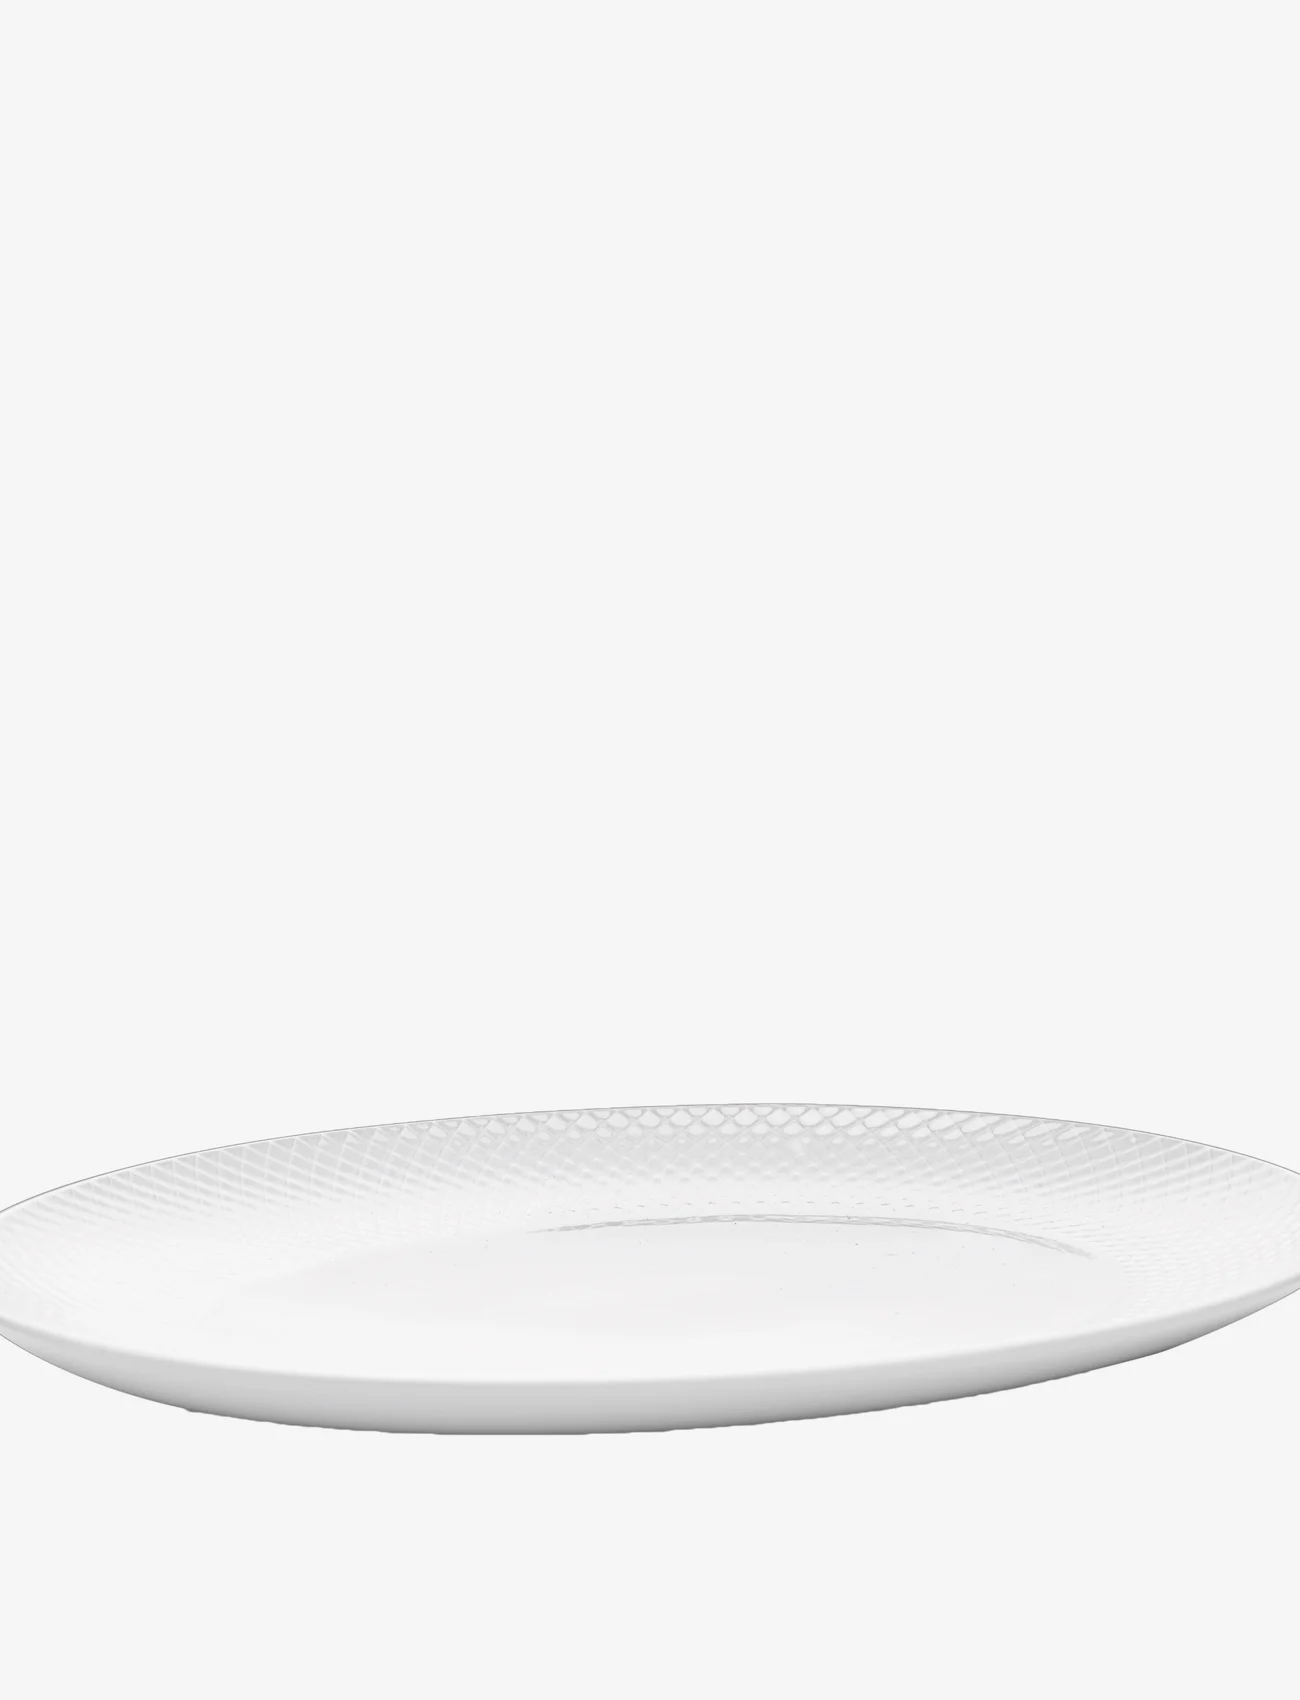 Lyngby Porcelæn - Rhombe Oval serving dish 35x26.5 white - dinner plates - white - 1